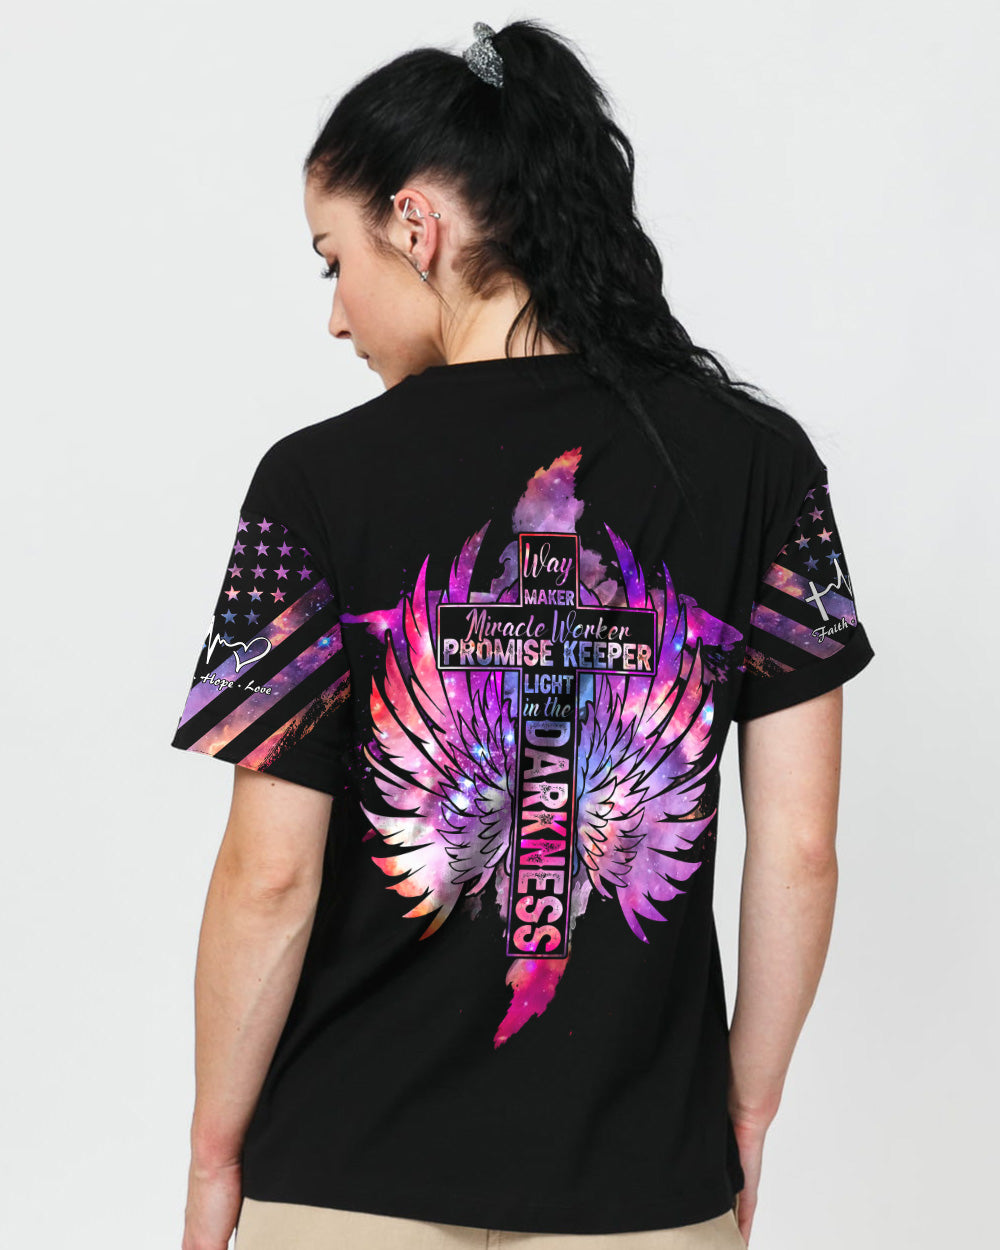 Way Maker Miracle Worker Galaxy Wings Cross Women's Christian Tshirt